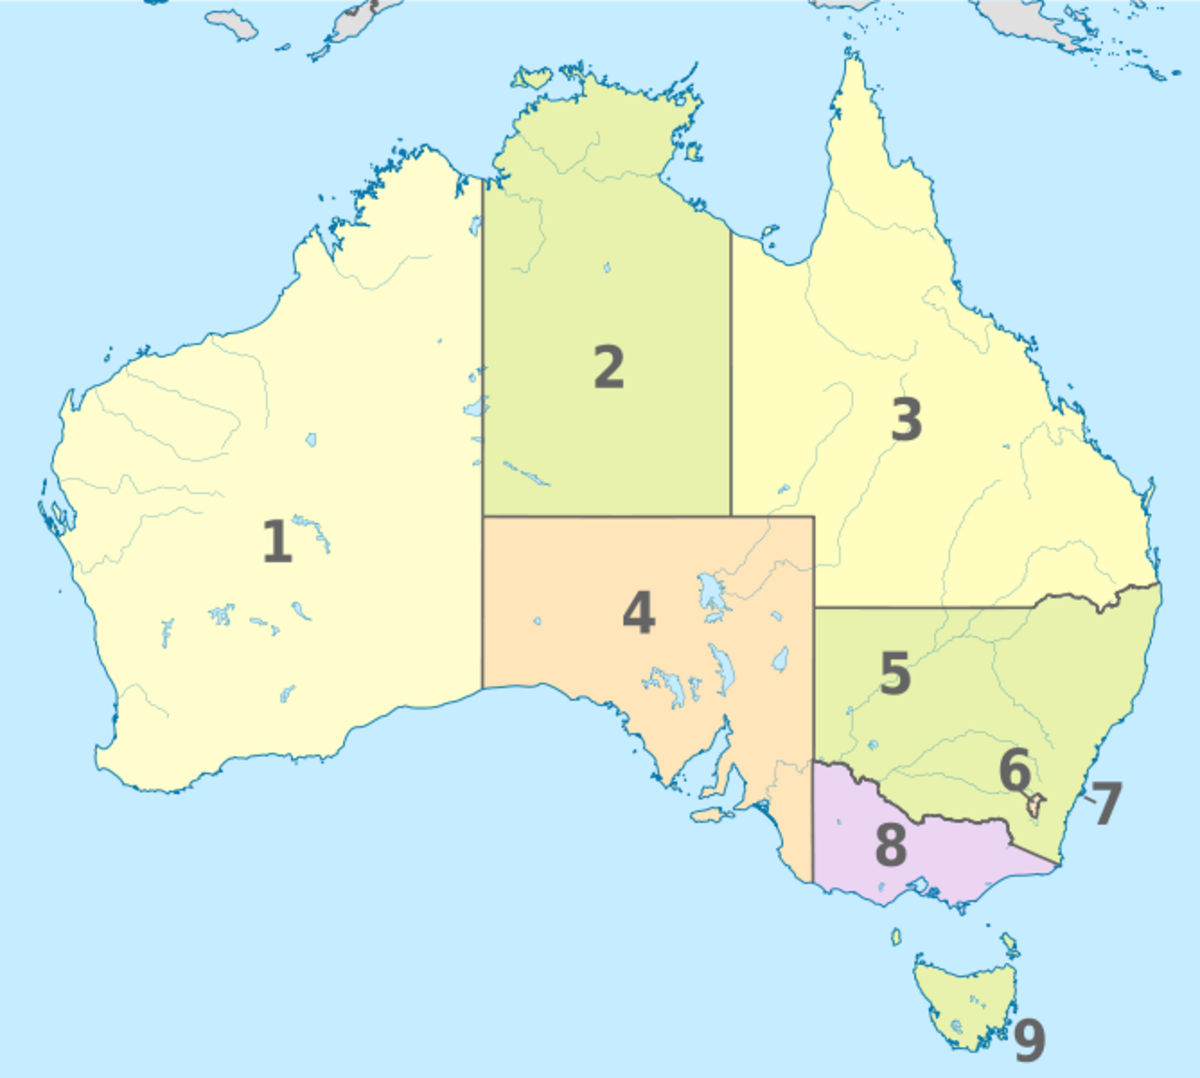 States and internal territories of Australia